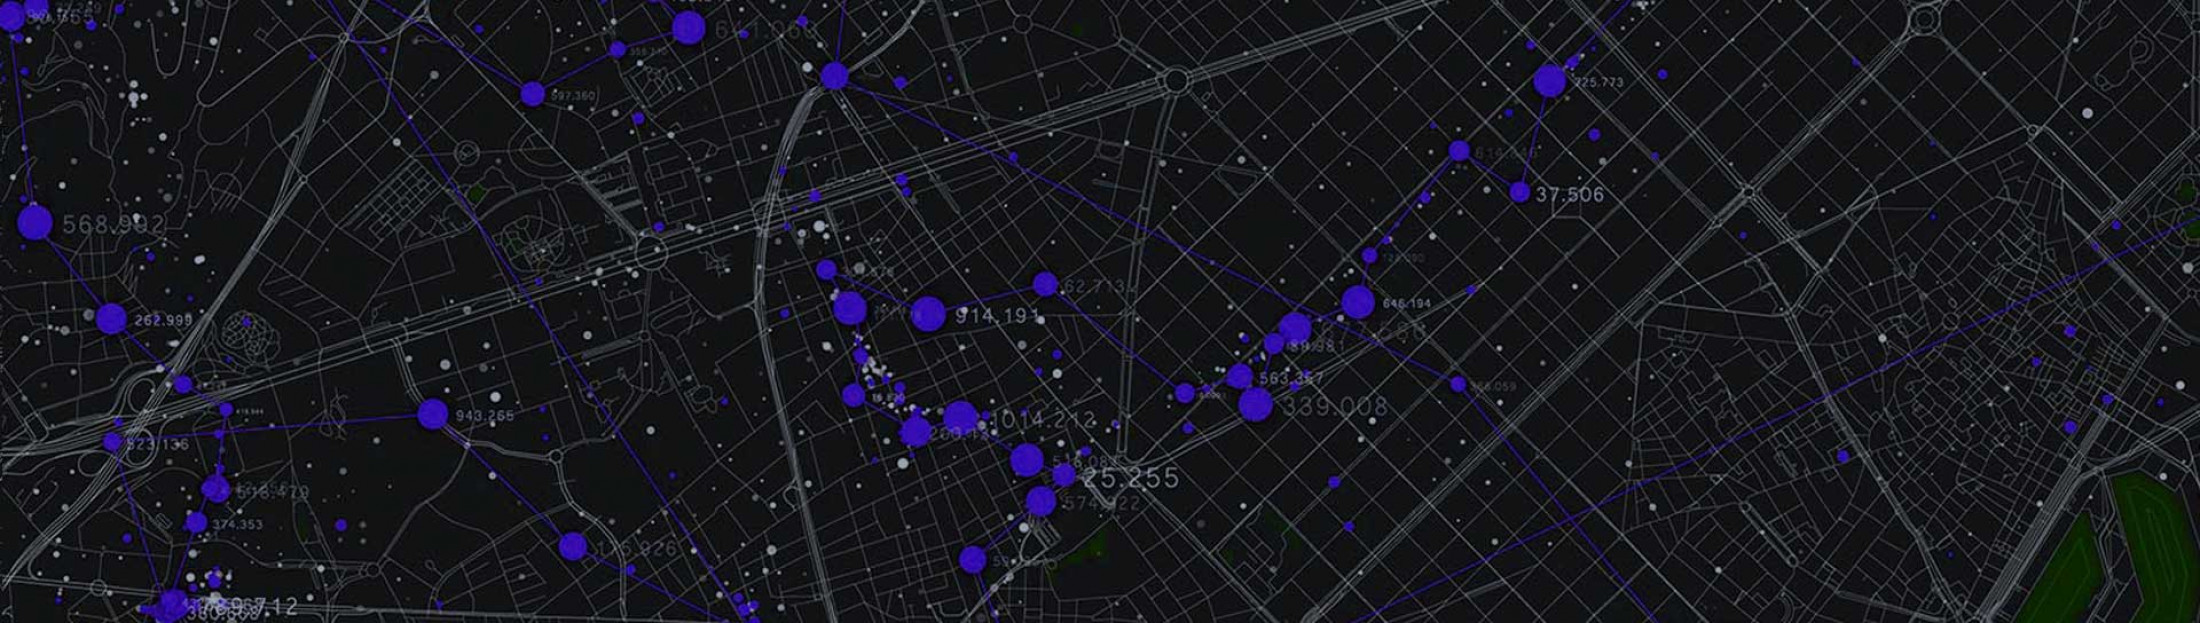 crowd-kinetics-city-heatmap-hotspots-blue-2.jpg